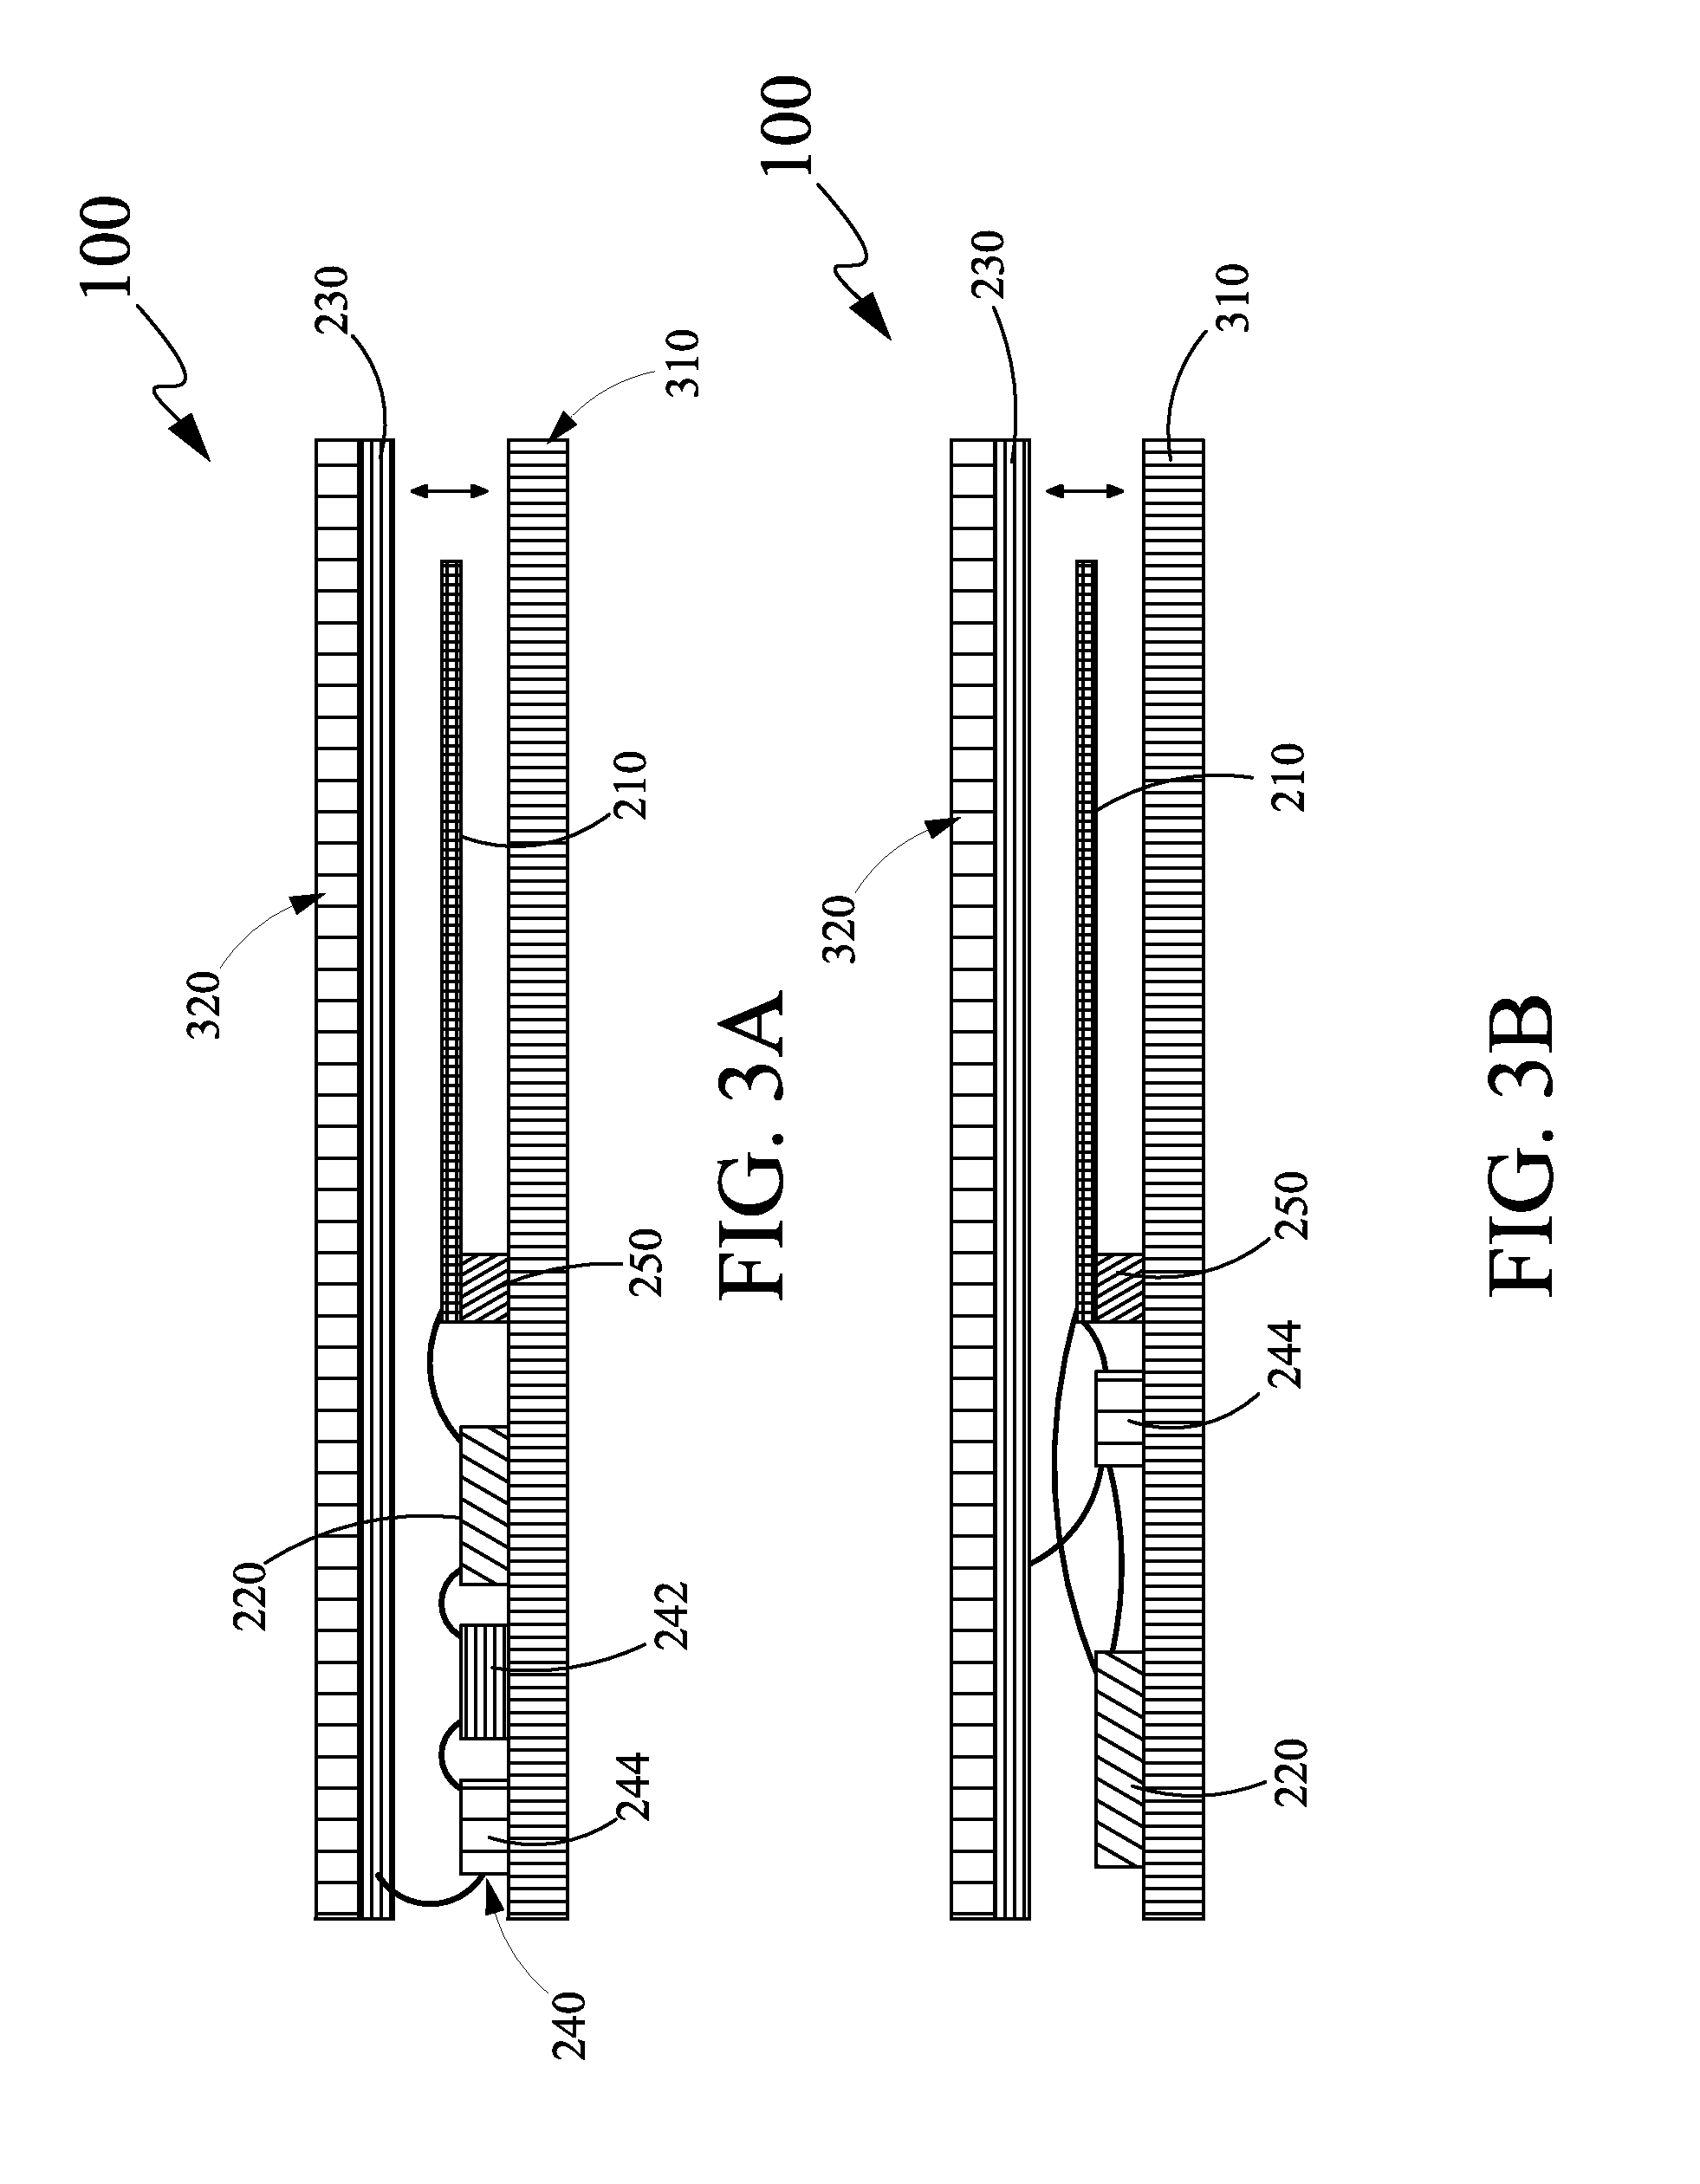 Stabilizer apparatus and method